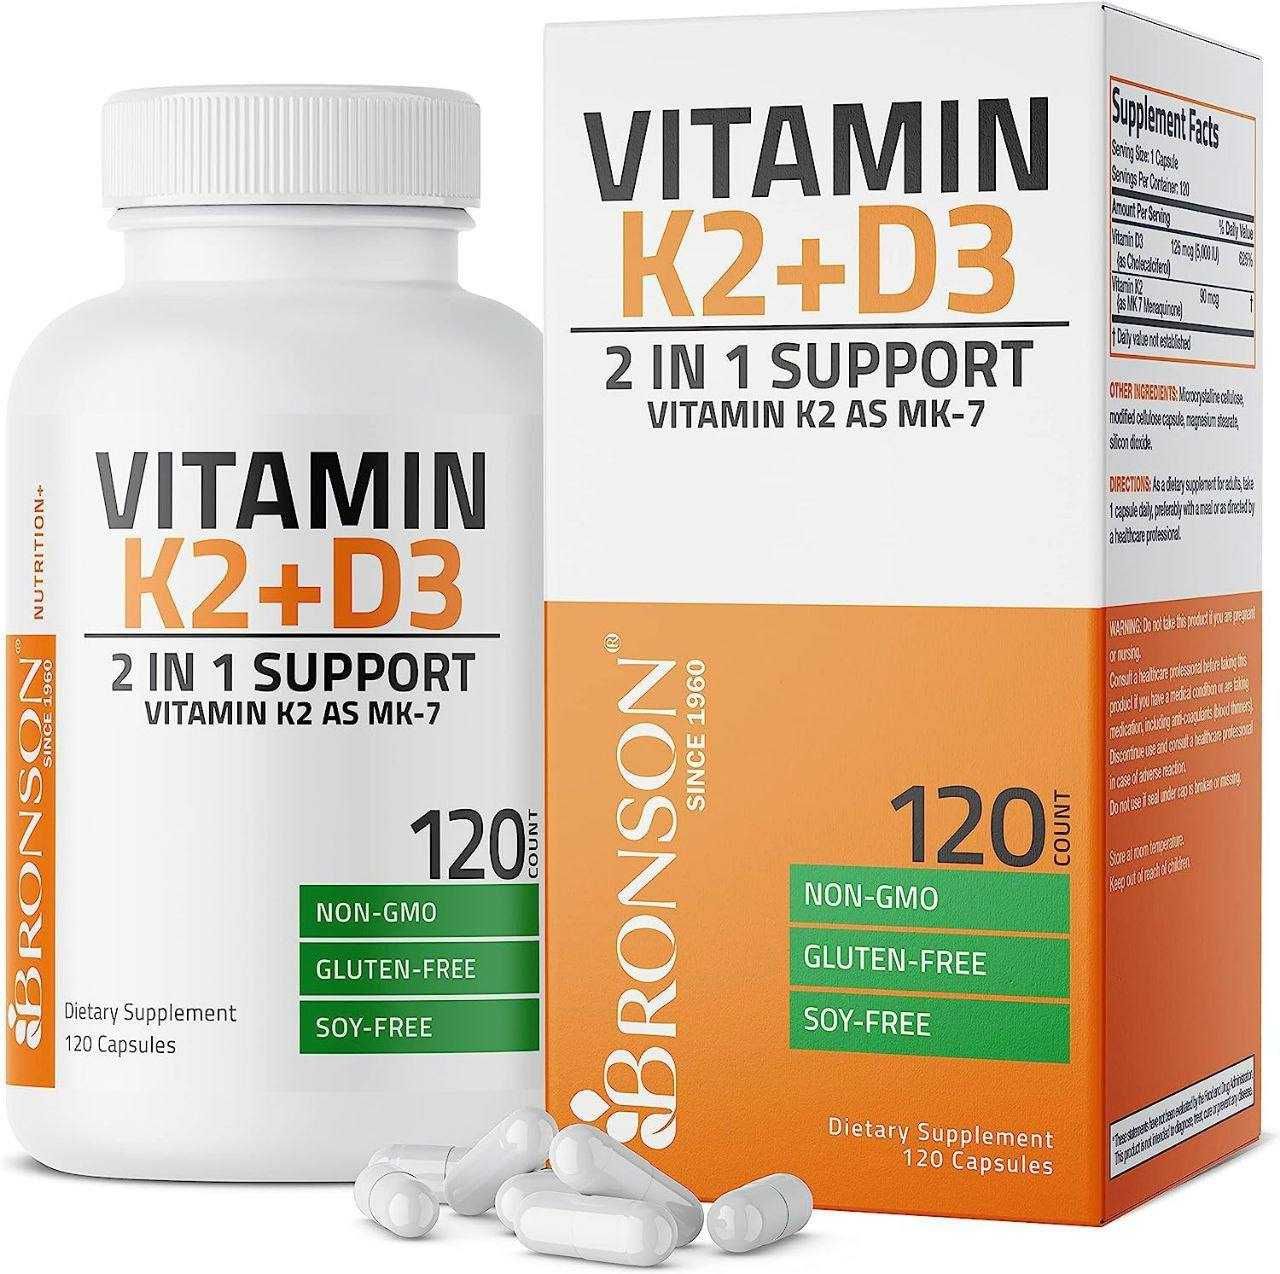 Витамин Д3+ К2 -5000 IU Bronson Vitamin - K2 (MK7) with D3 США